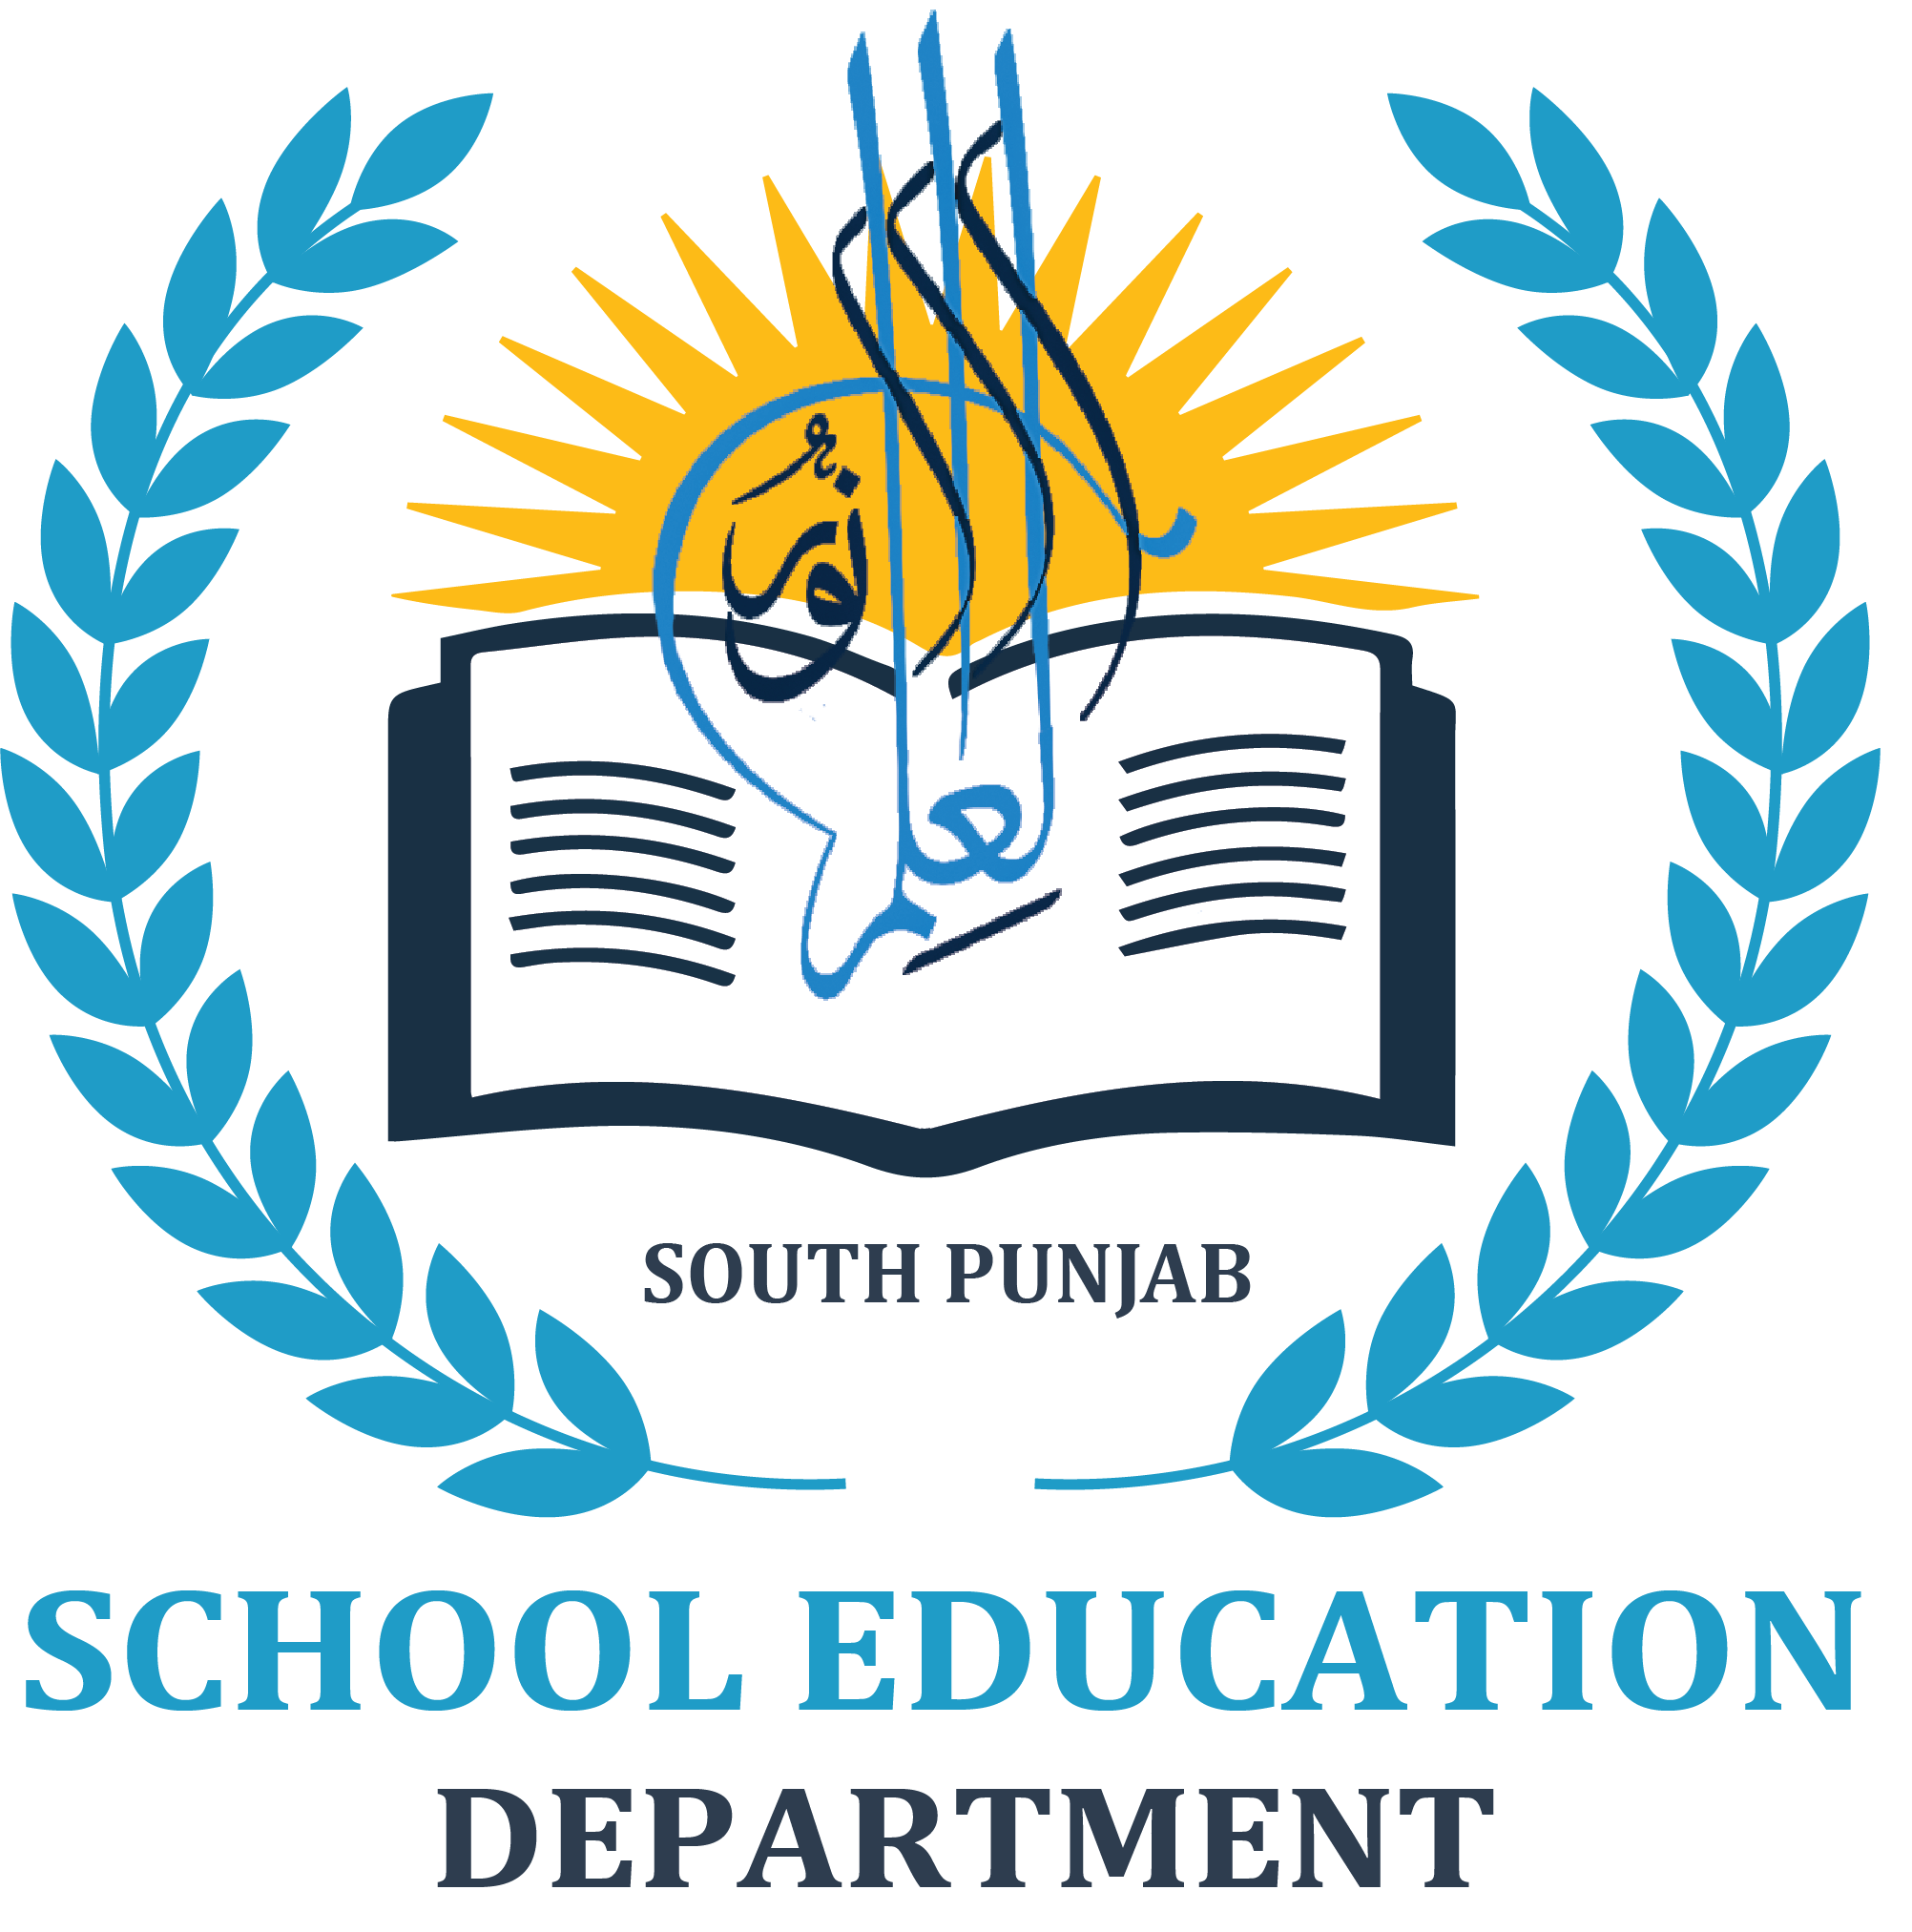 School Education Department South Punjab